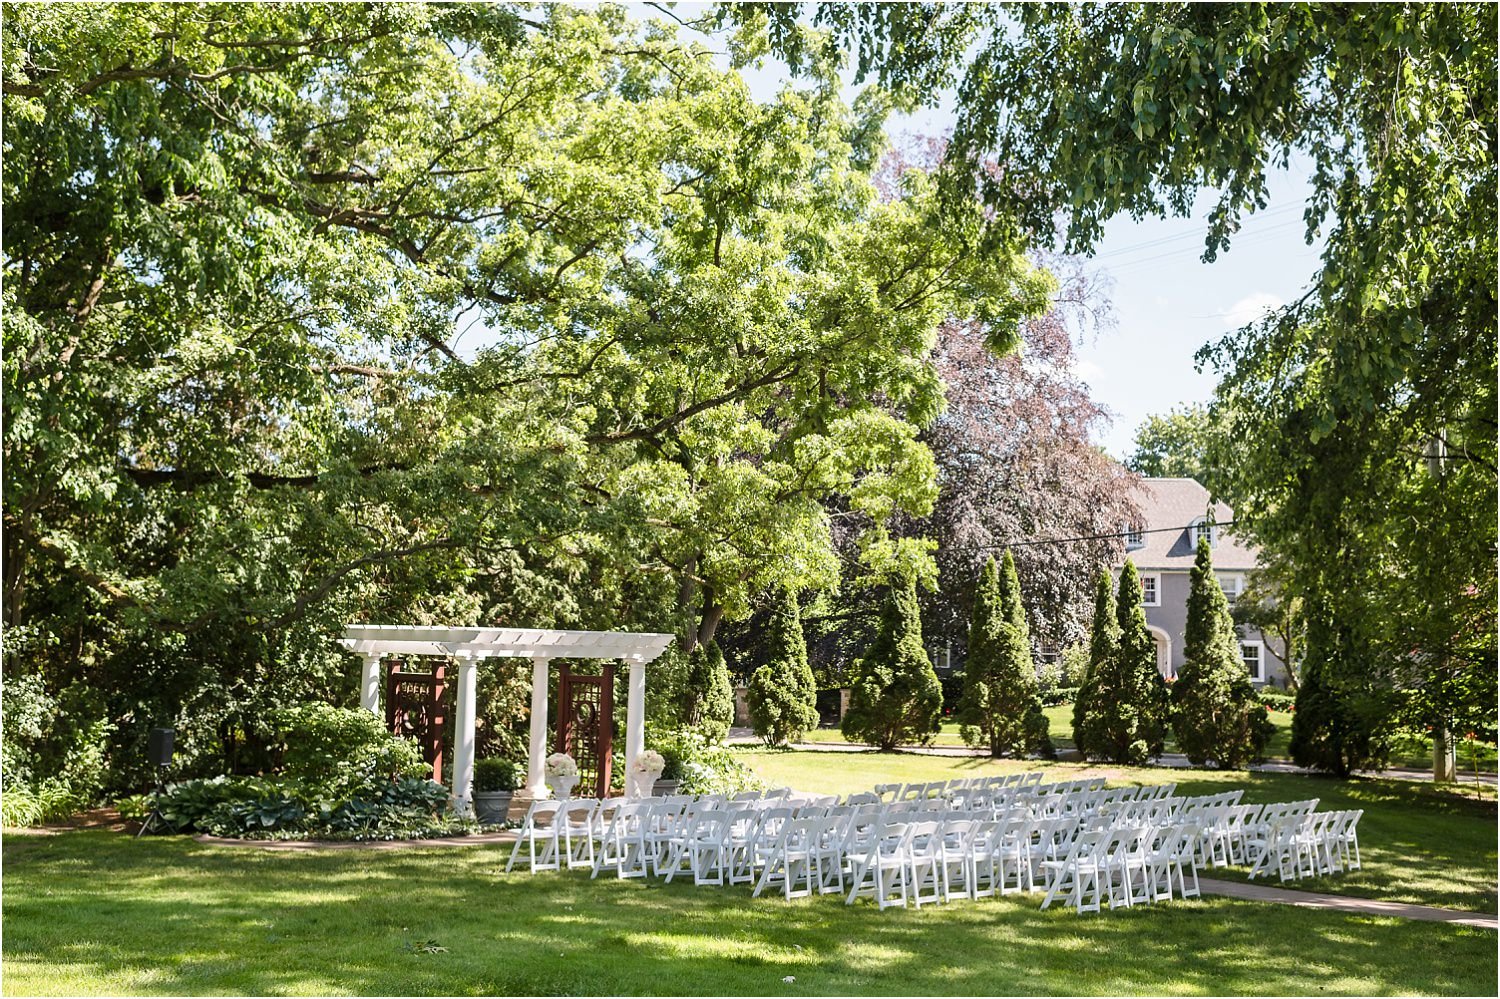  A beautiful outdoor ceremony site under a pergola in Ann Arbor.  